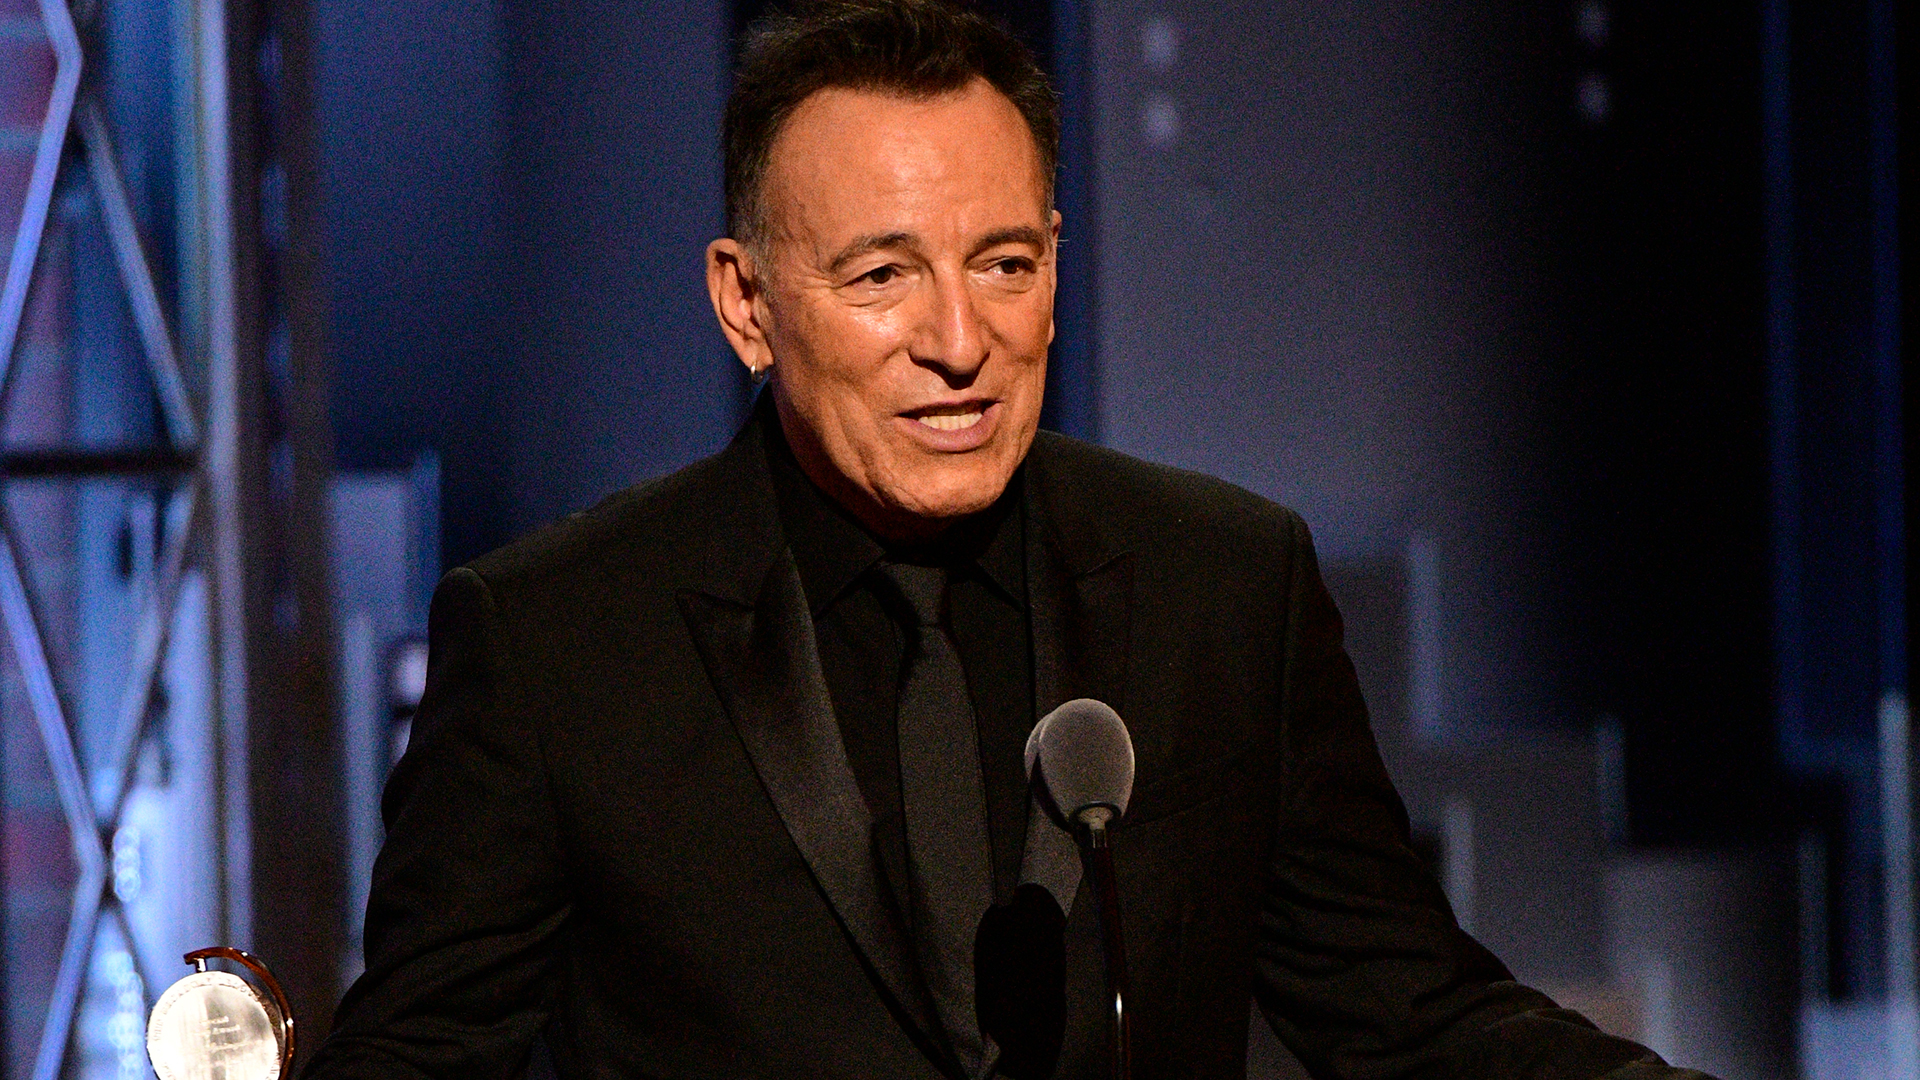 Bruce Springsteen receives a special award at the 2018 Tony Awards.